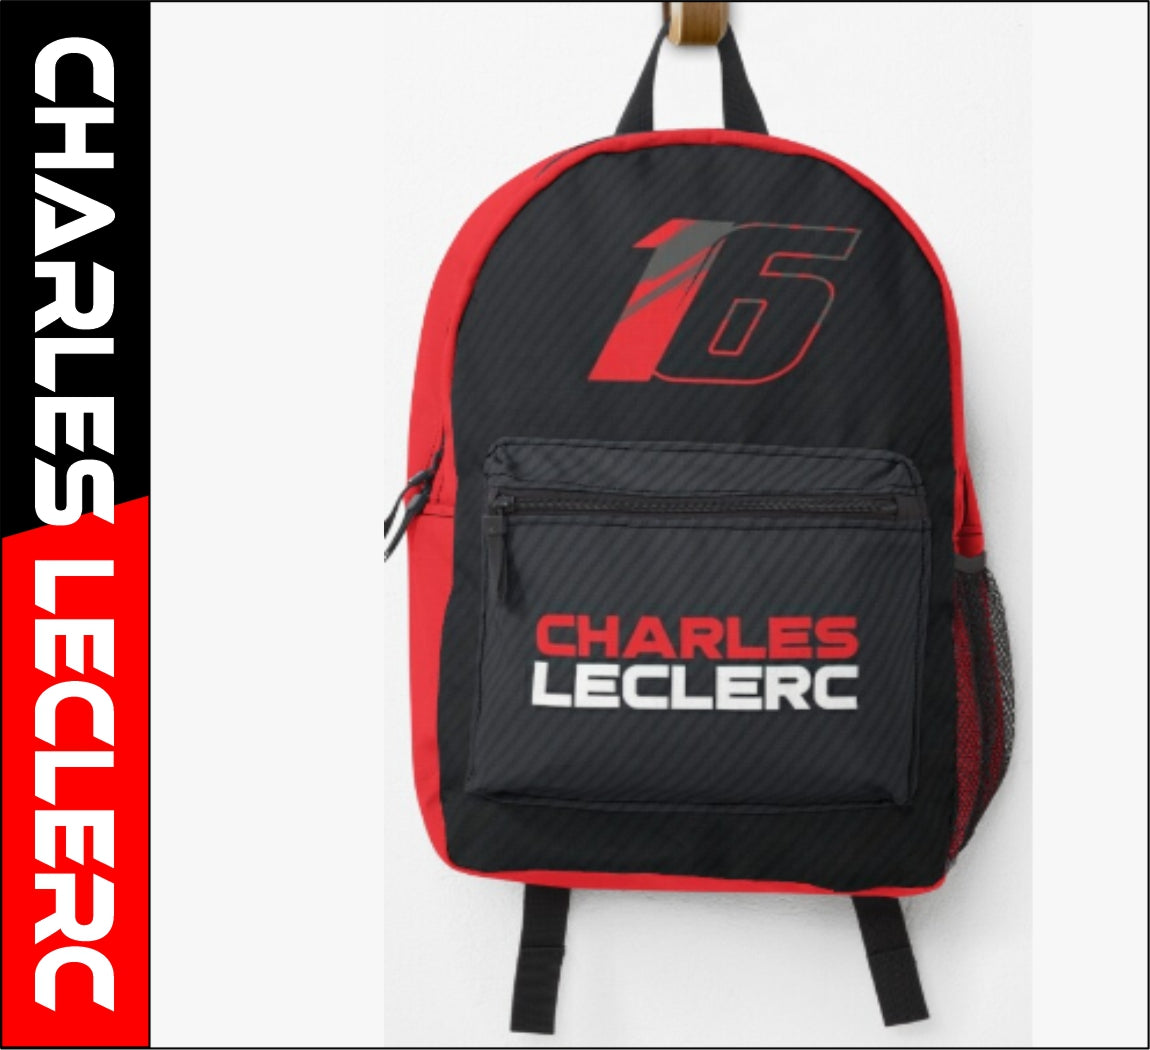 Charles Leclerc 16 Backpack